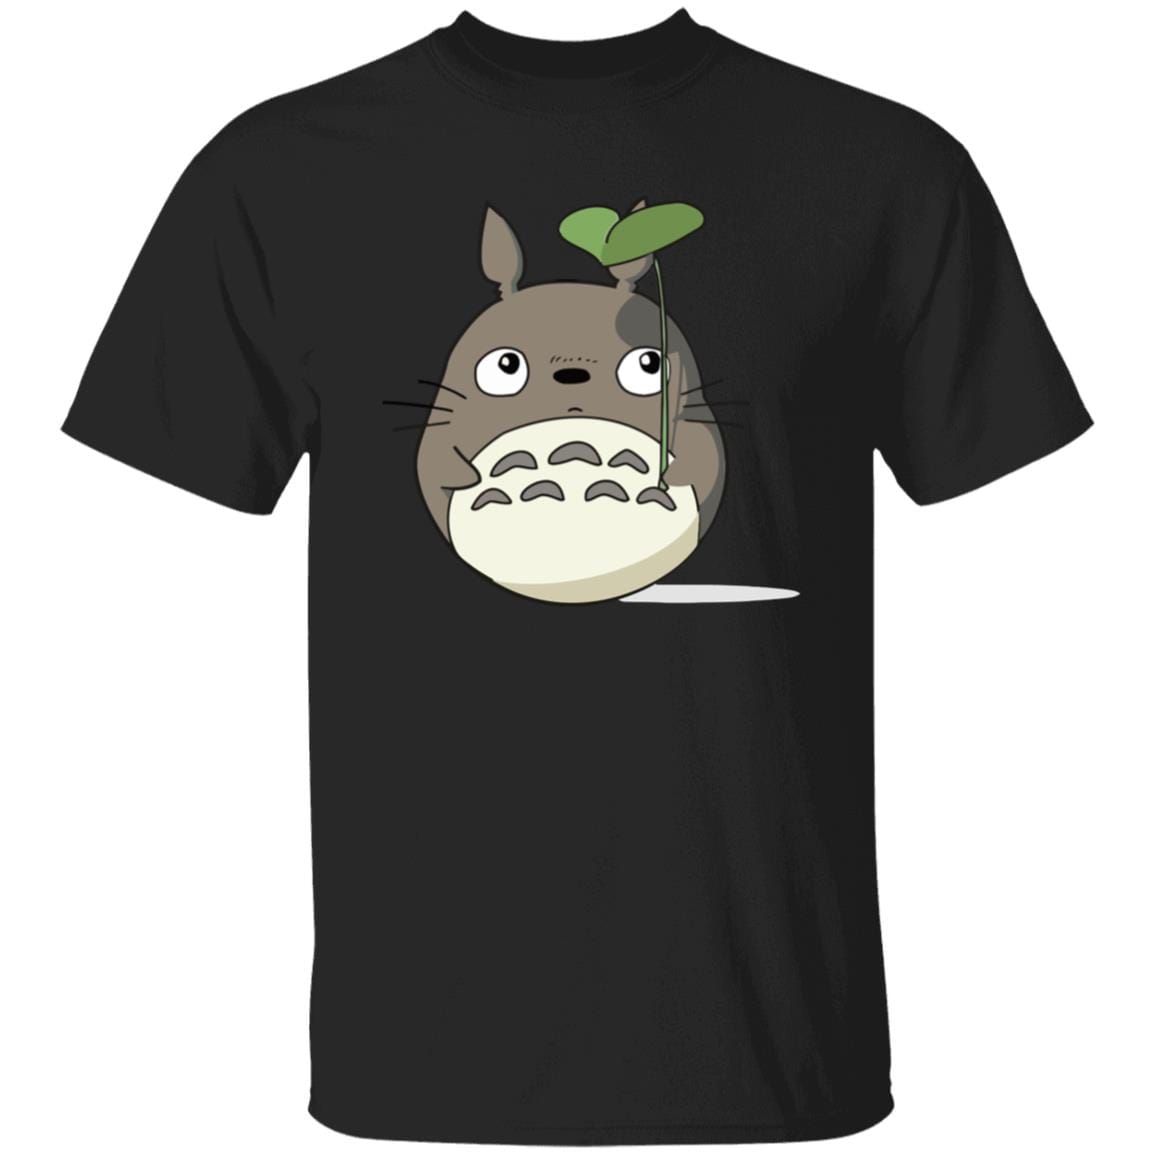 Totoro and the Leaf Umbrella T Shirt